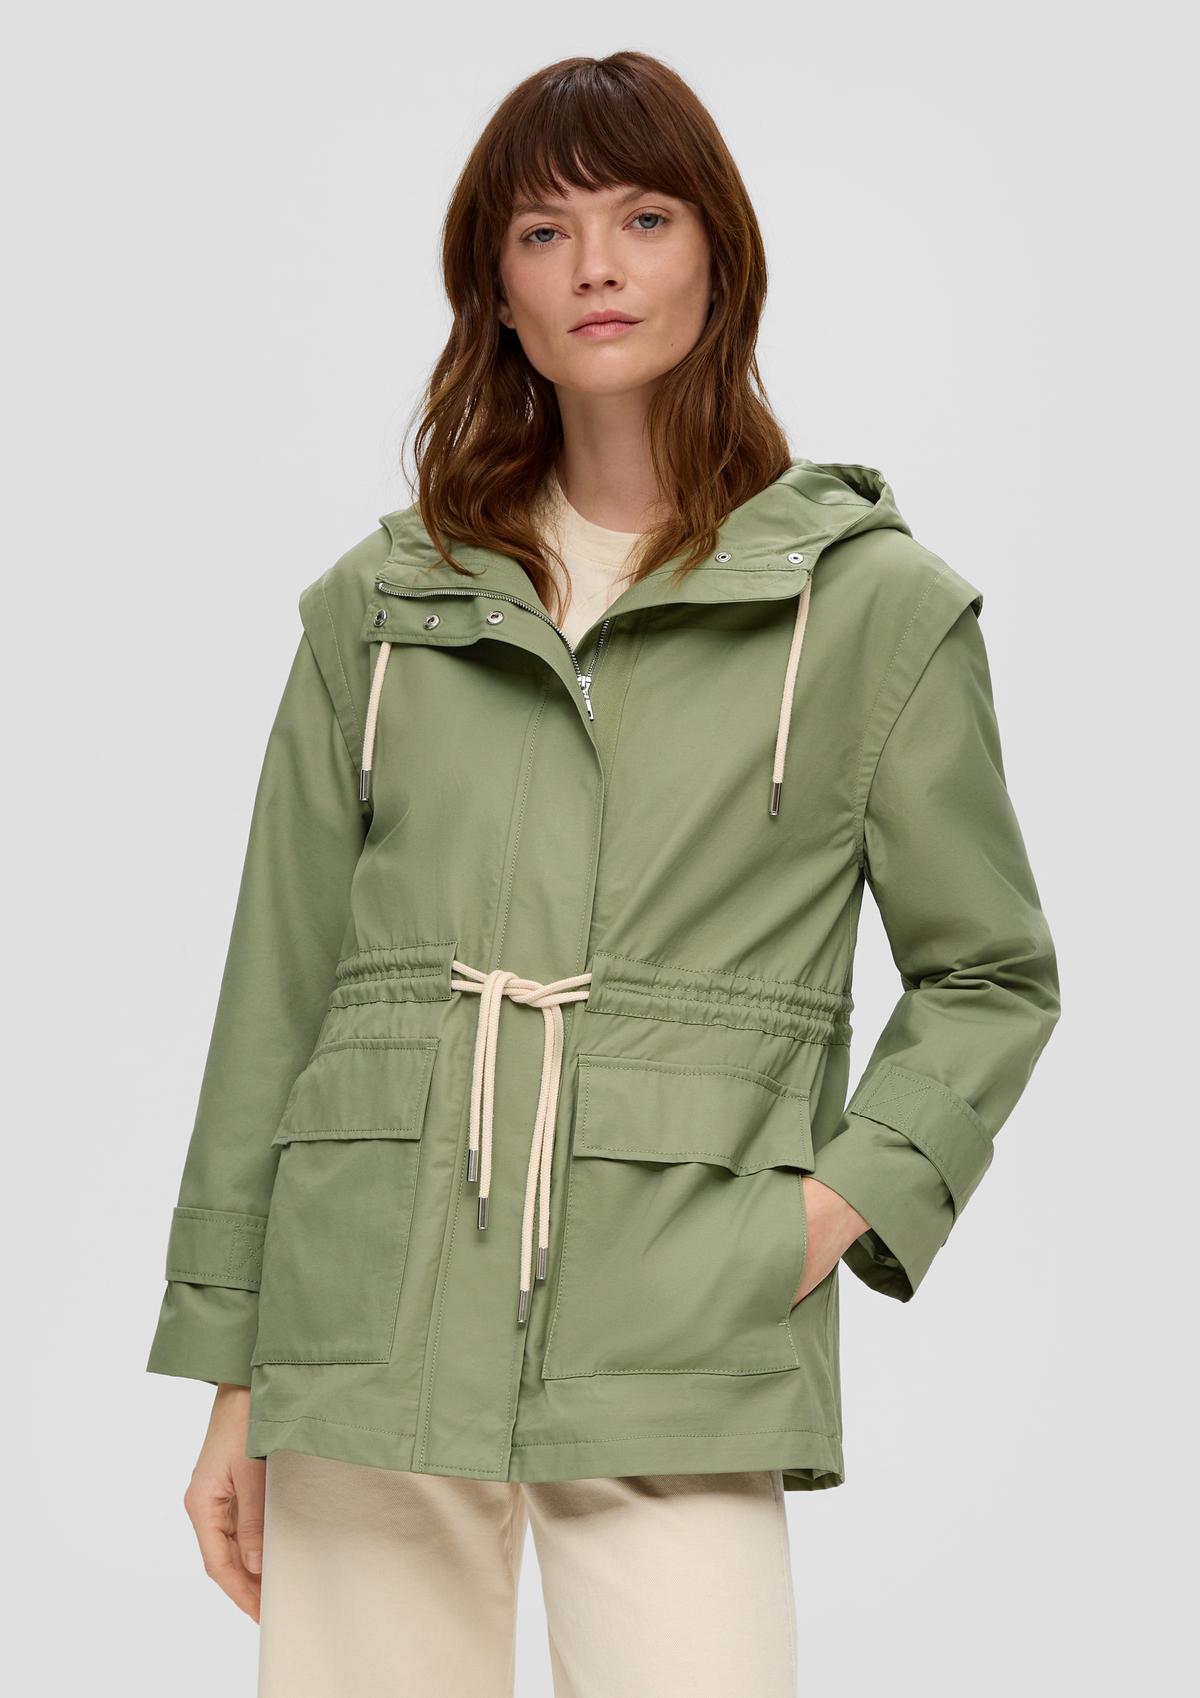 Buy women\'s light jackets online now